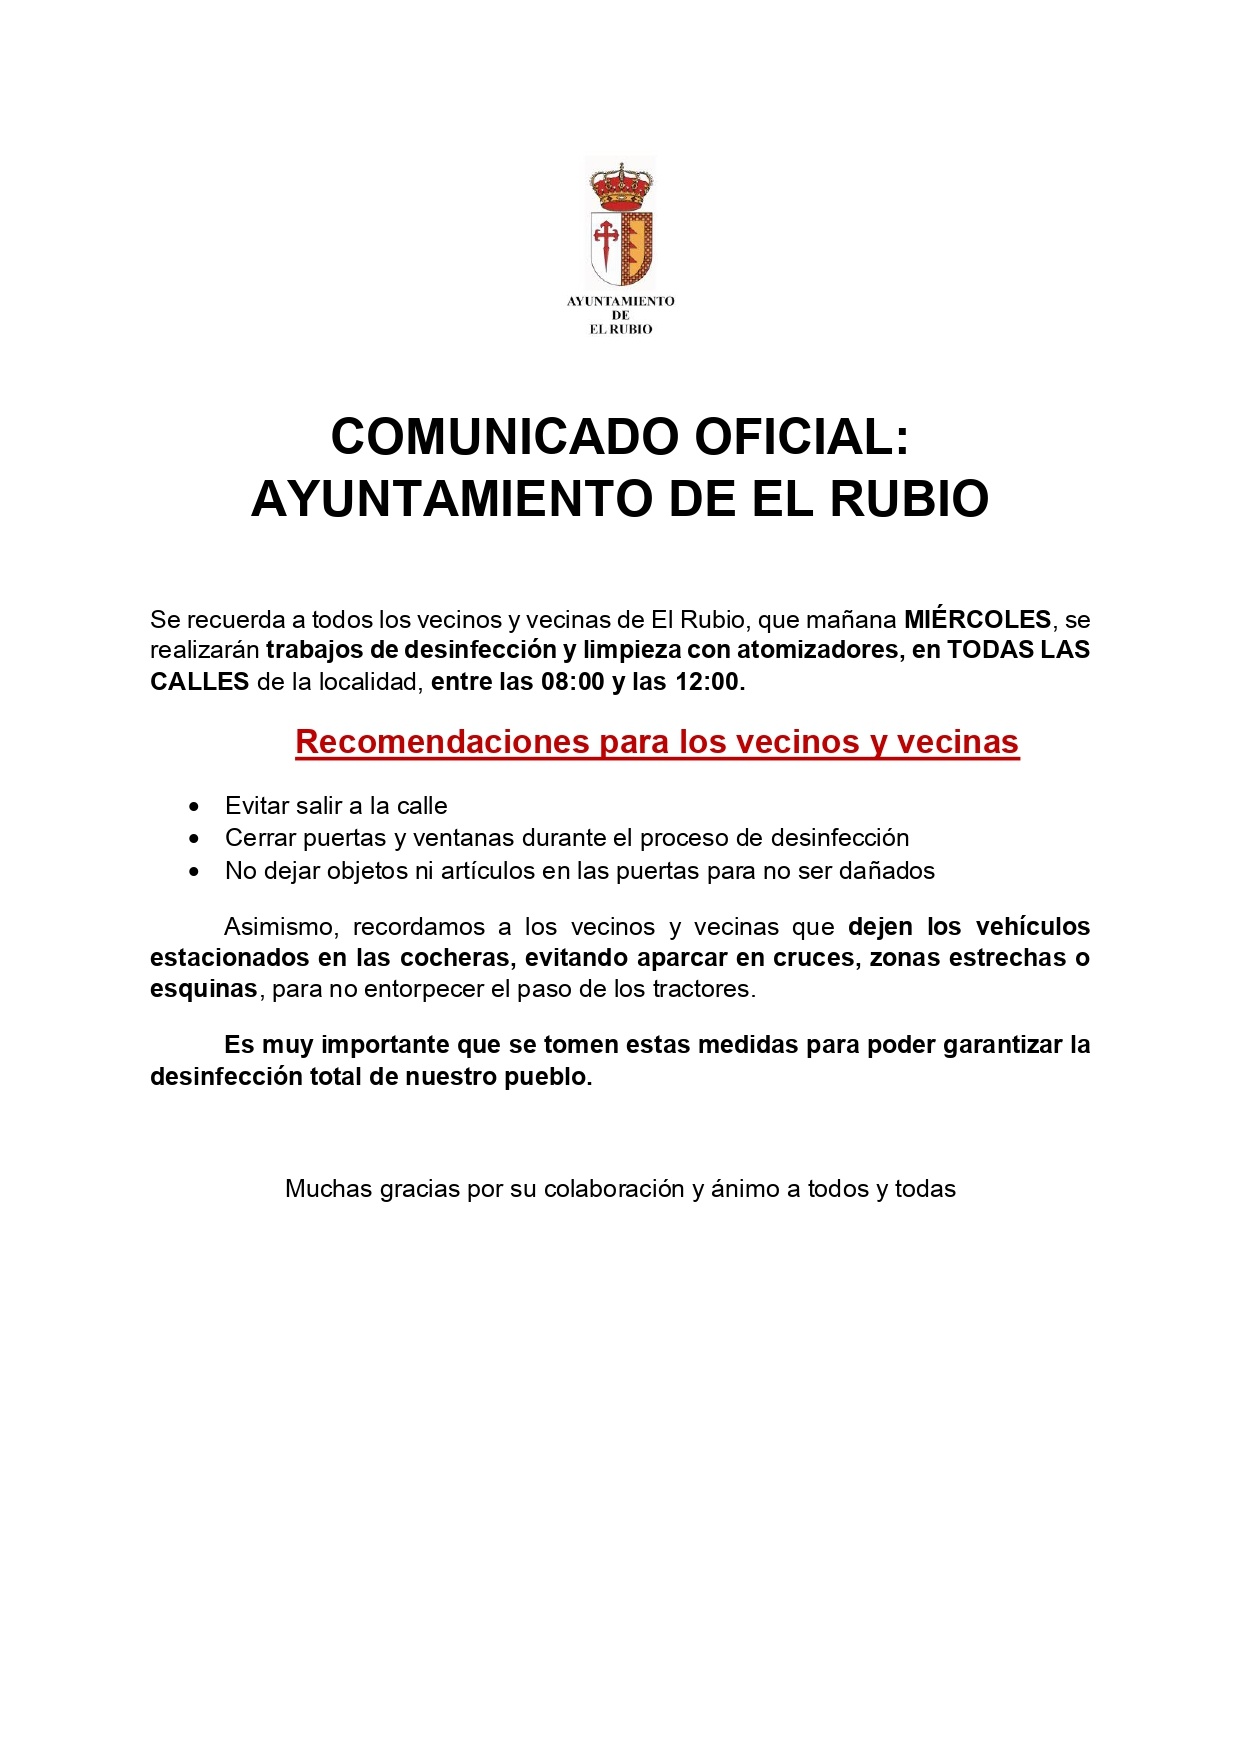 COMUNICADO OFICIAL AYTO RUBIO 28-04-20_page-0001